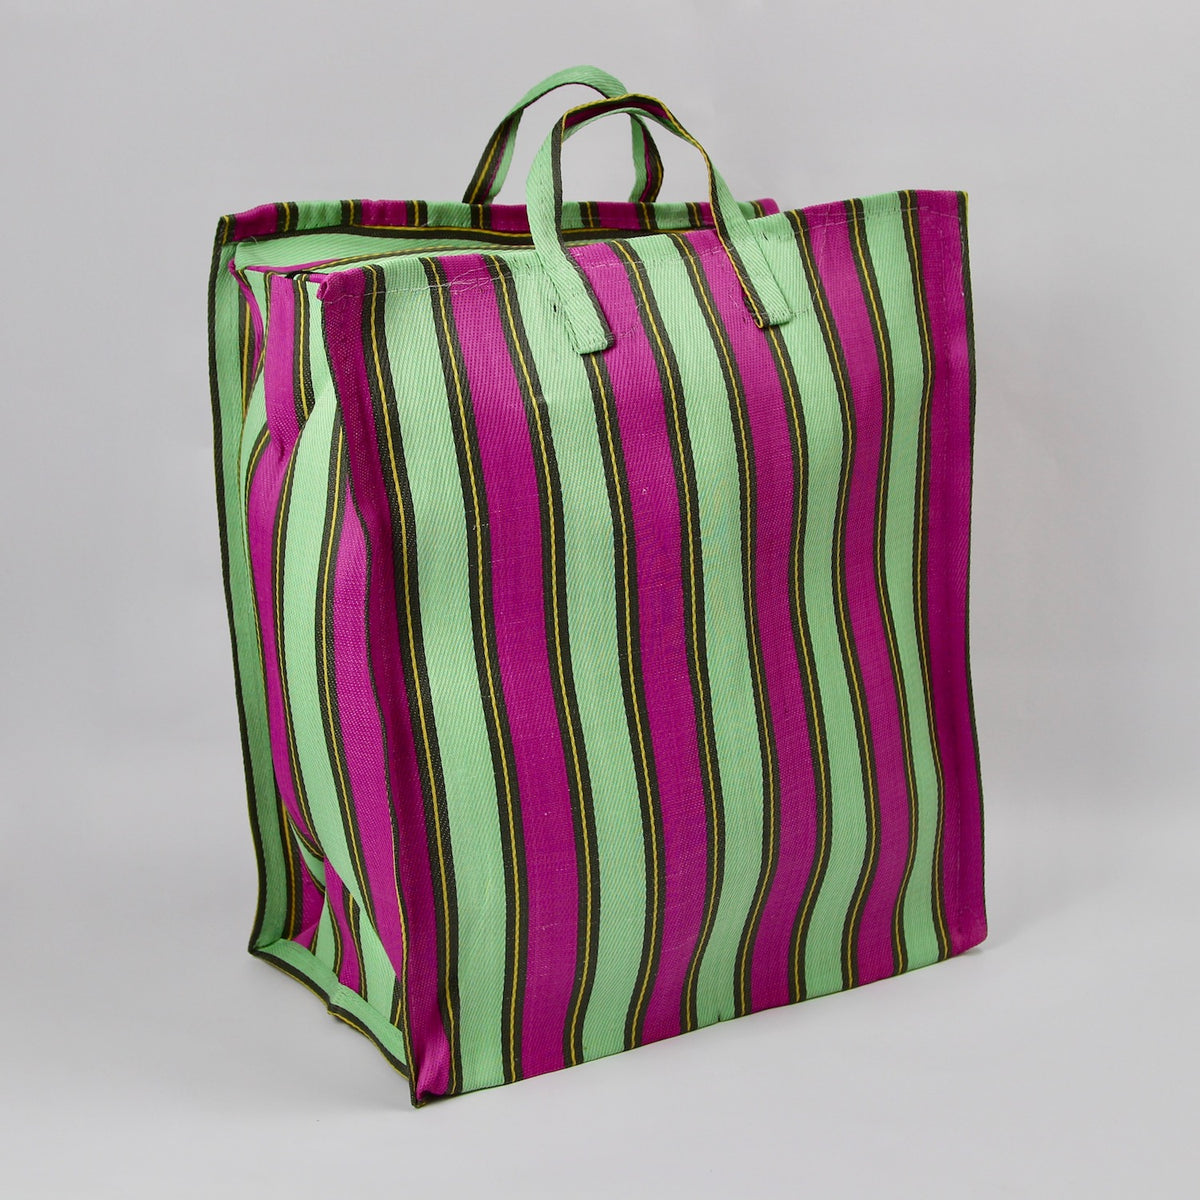 Size 5 Striped Market Bag - Pink/Mint/Chocolate